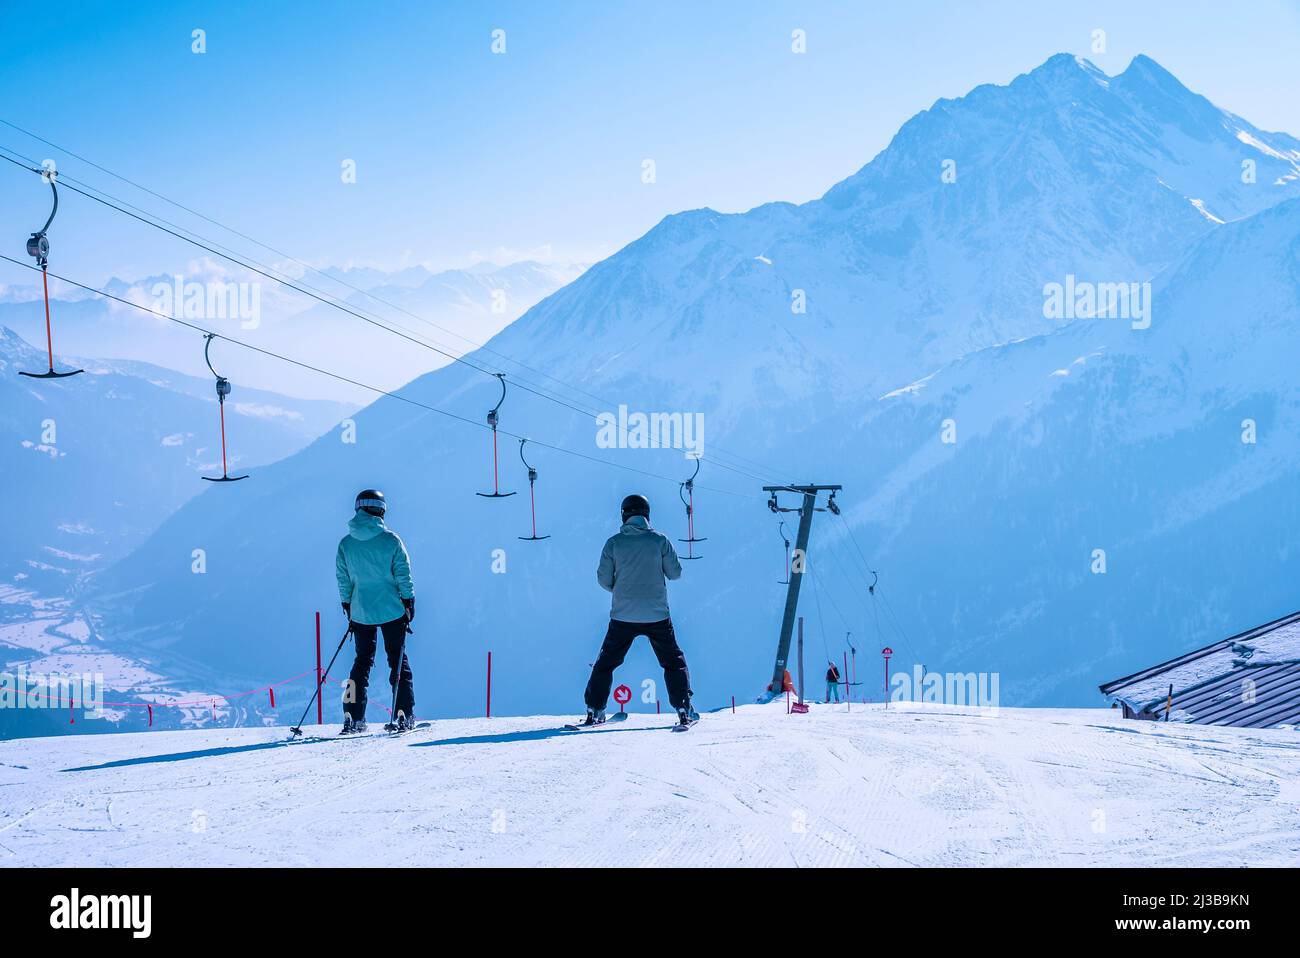 Premium Photo  Skiers sliding down snowy slope on mountain at